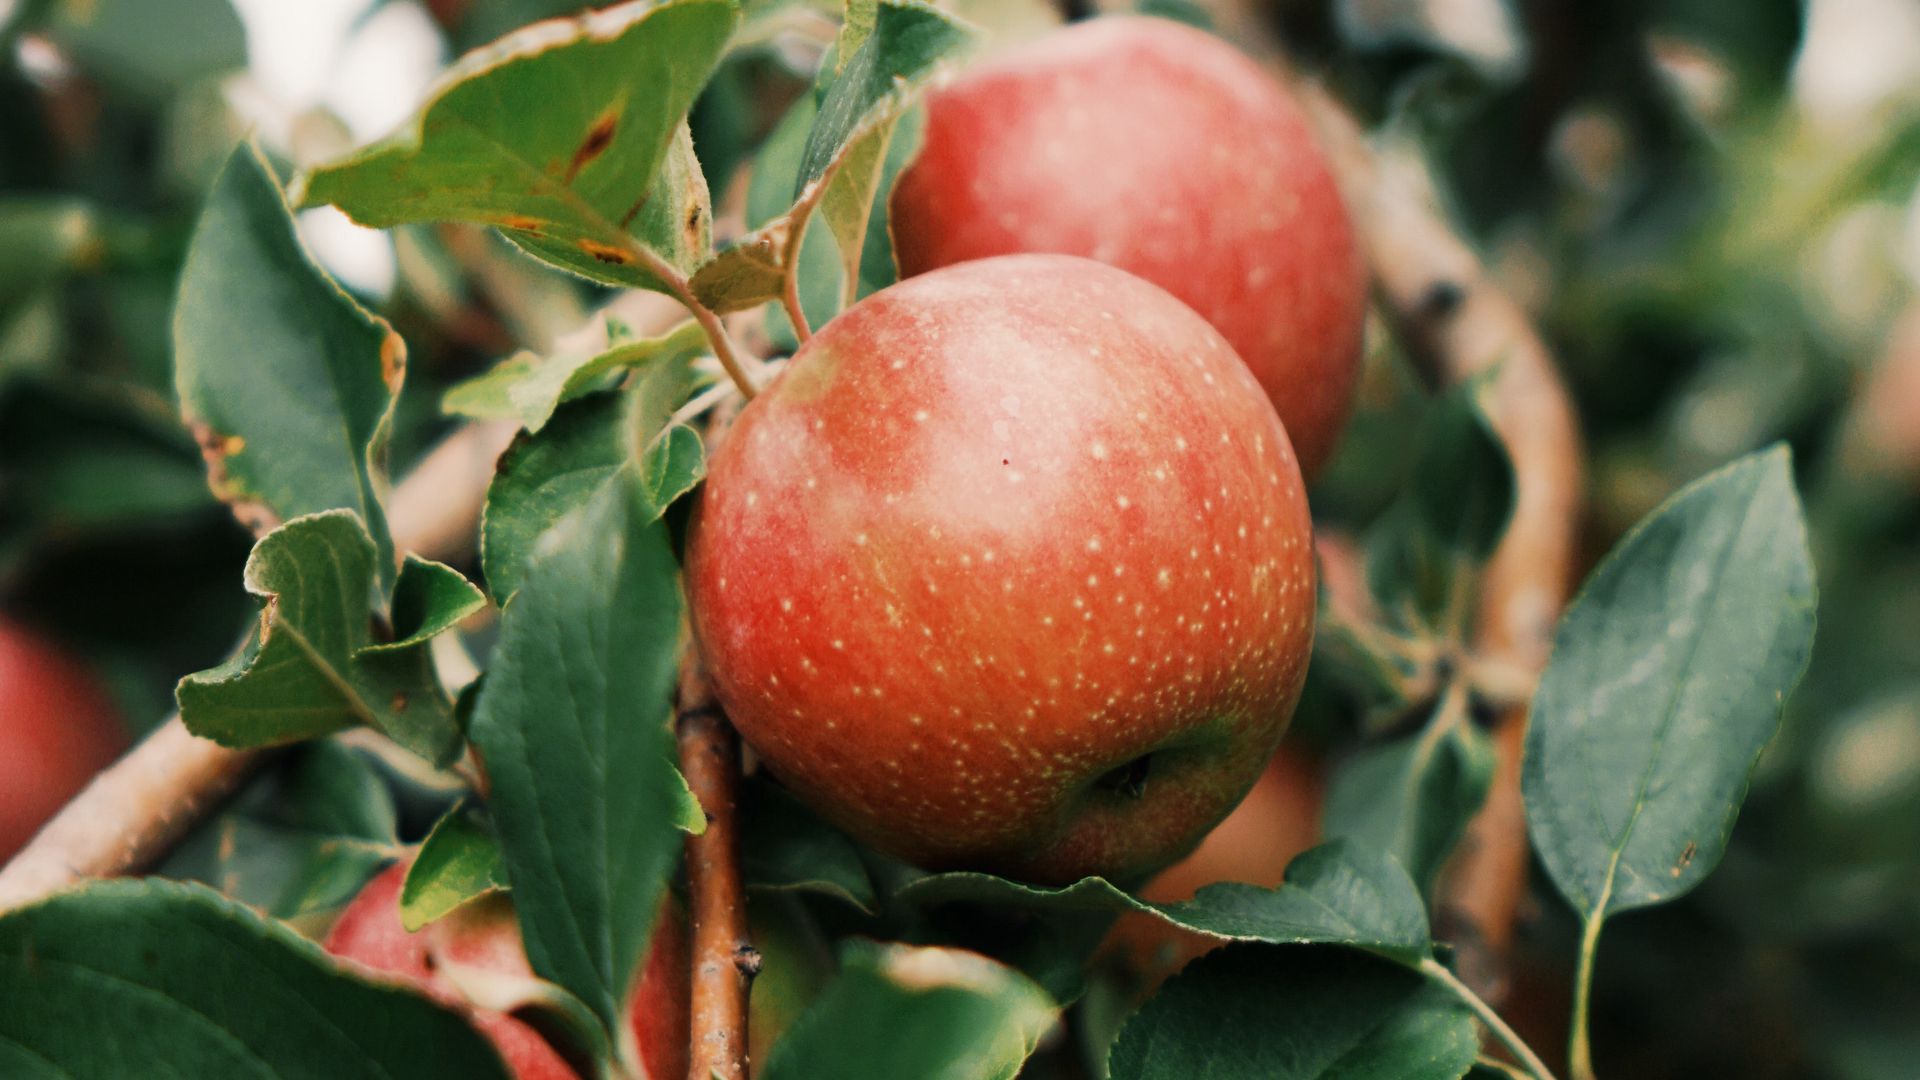 Download wallpaper 1920x1080 apples, fruit, branch, tree, garden full hd, hdtv, fhd, 1080p HD background